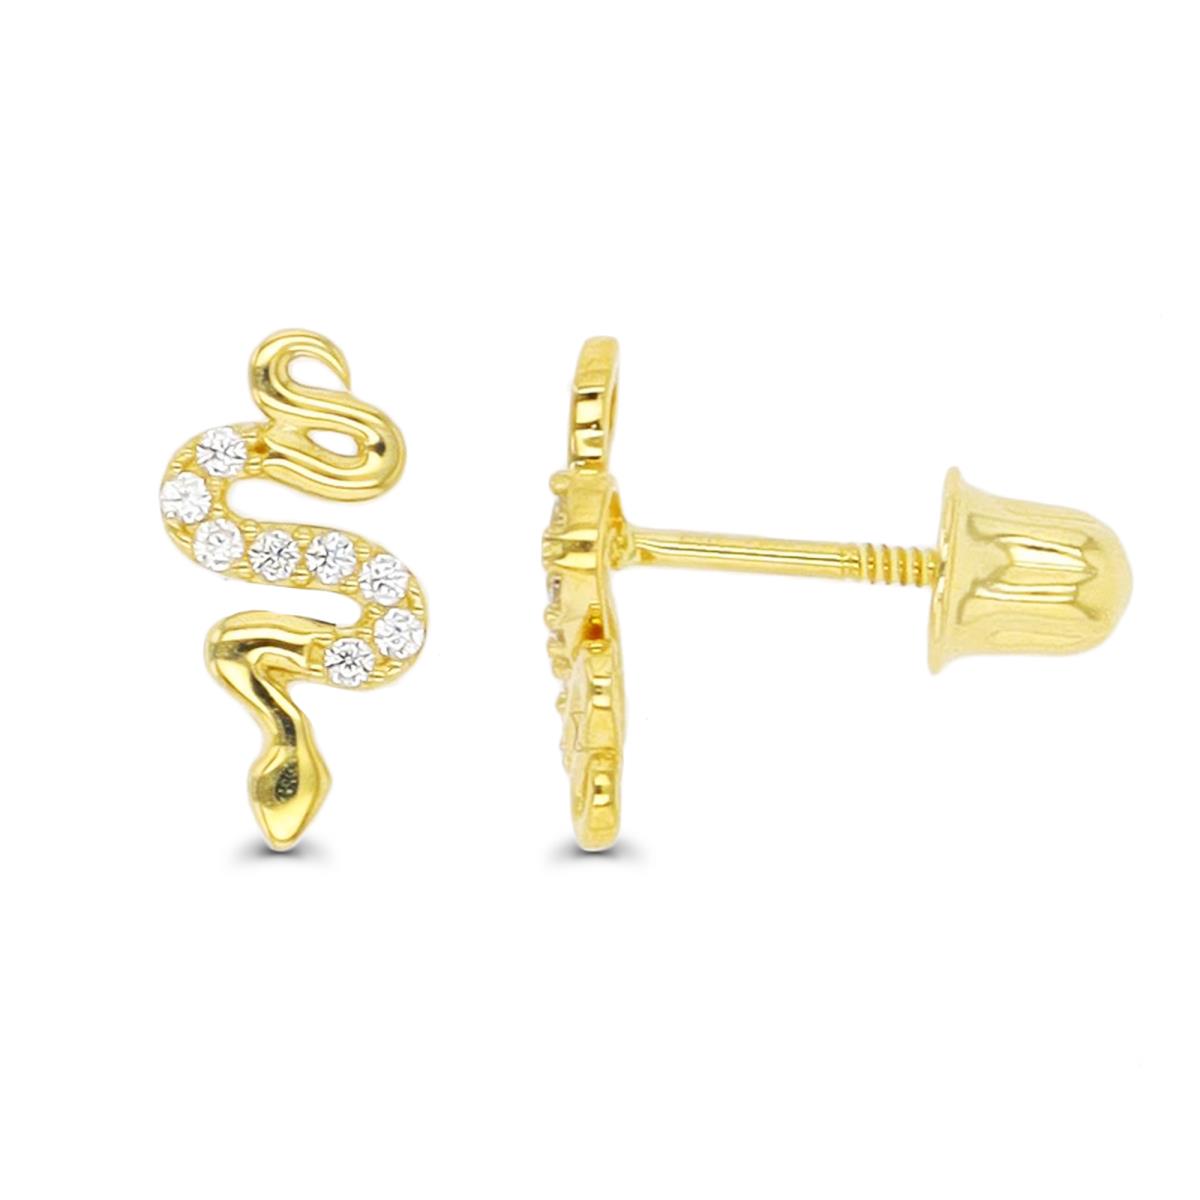 10K Yellow Gold Snake Screwback Stud Earring